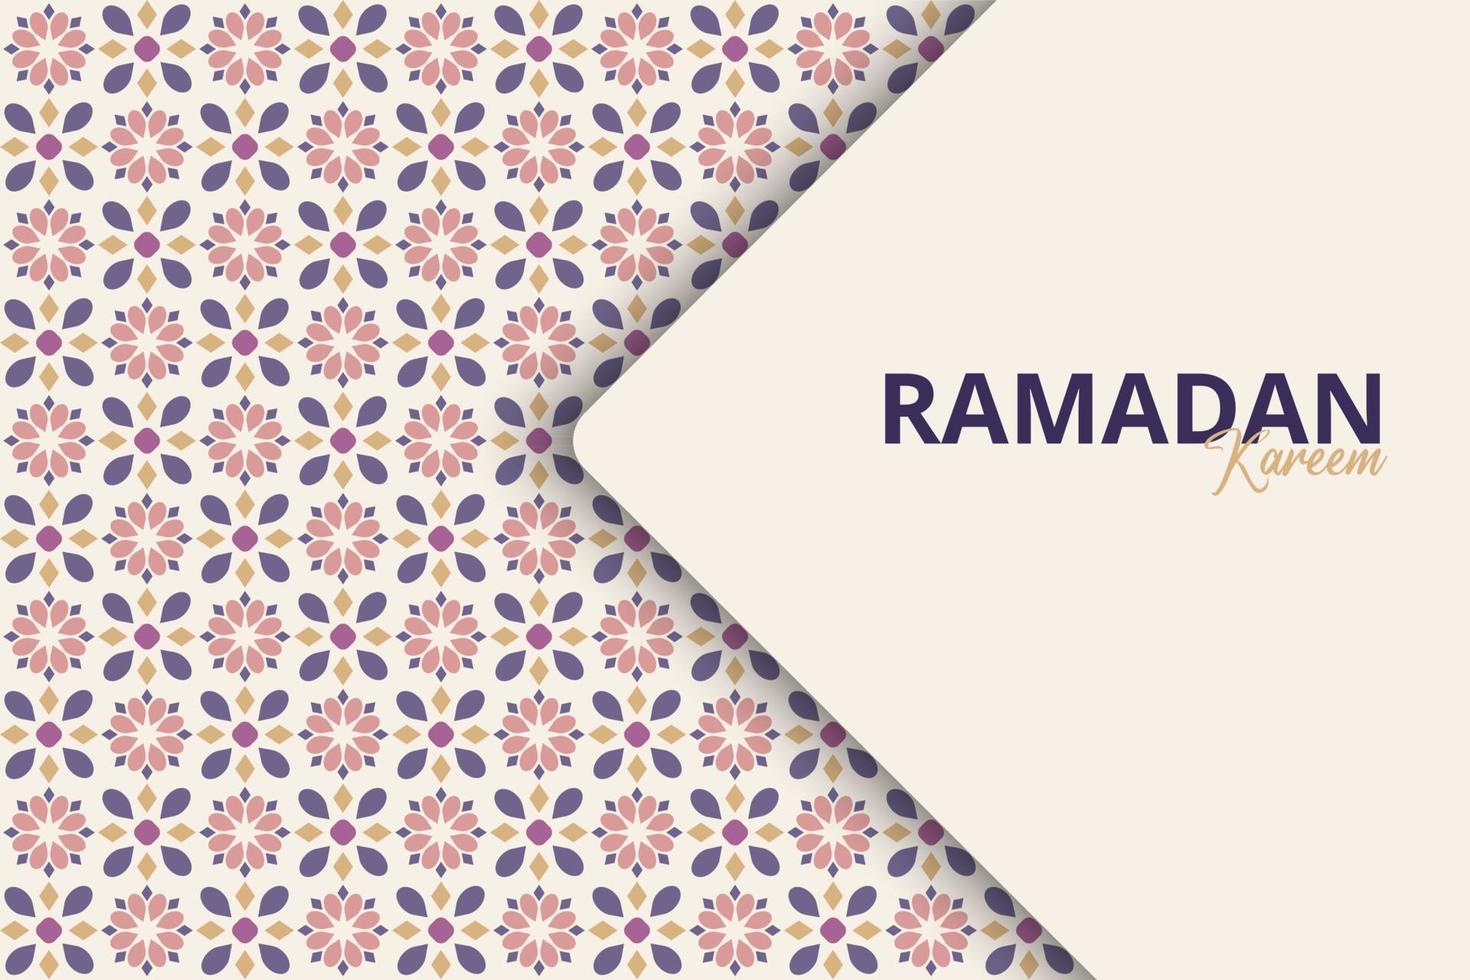 Ramadan kareem with arabic ornament background vector